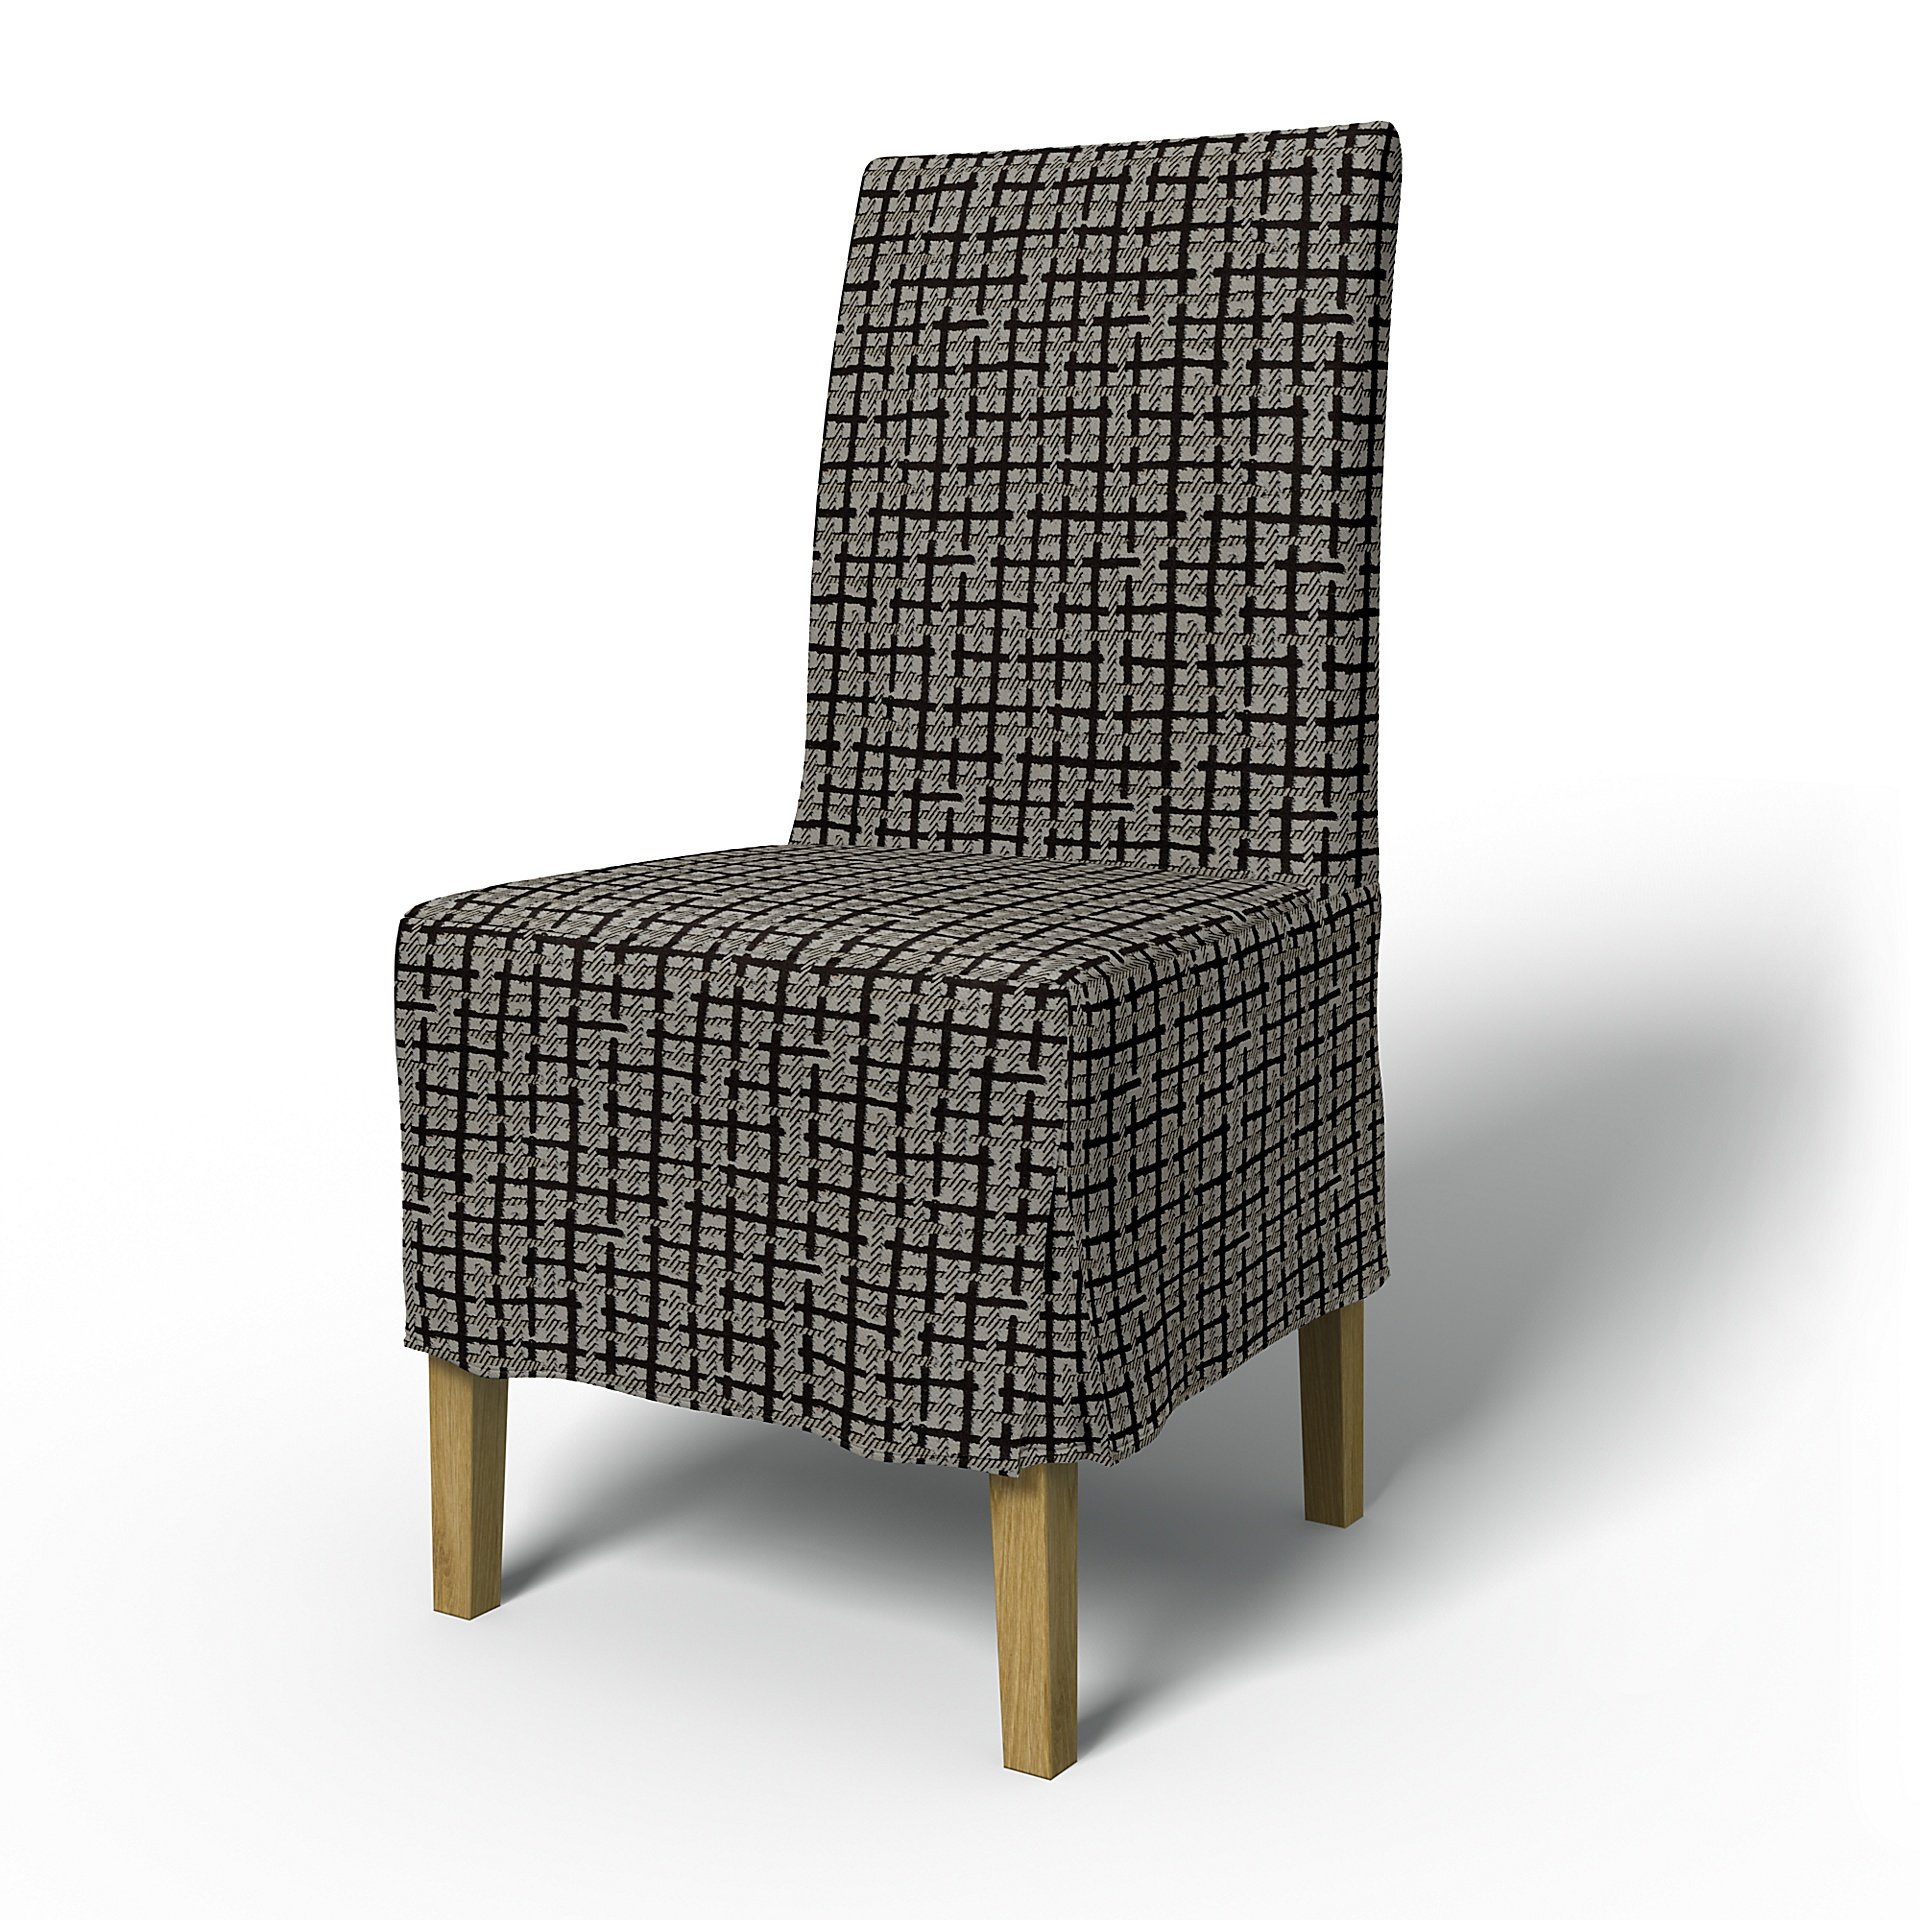 IKEA - Henriksdal Dining Chair Cover Medium skirt with Box Pleat (Standard model), Chocolate, Velvet